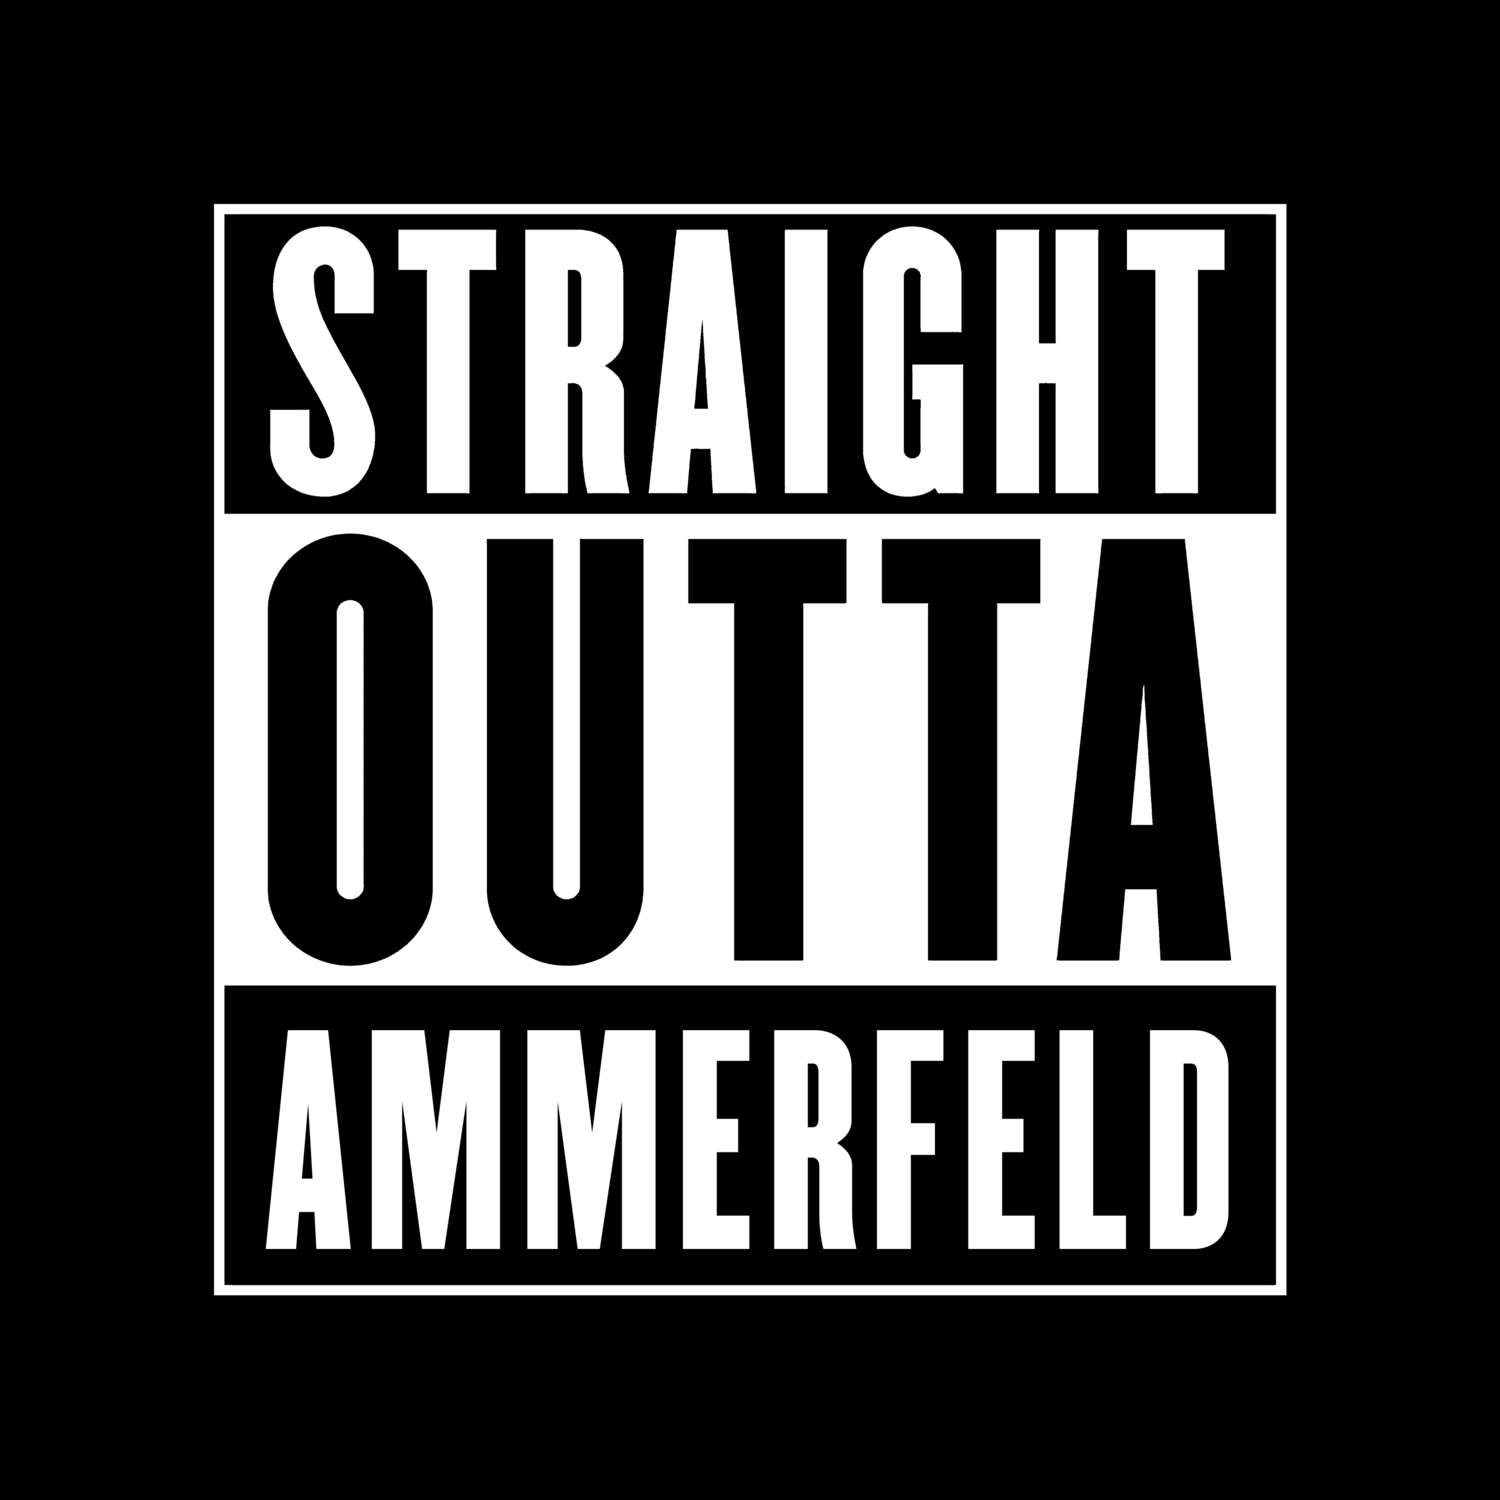 Ammerfeld T-Shirt »Straight Outta«